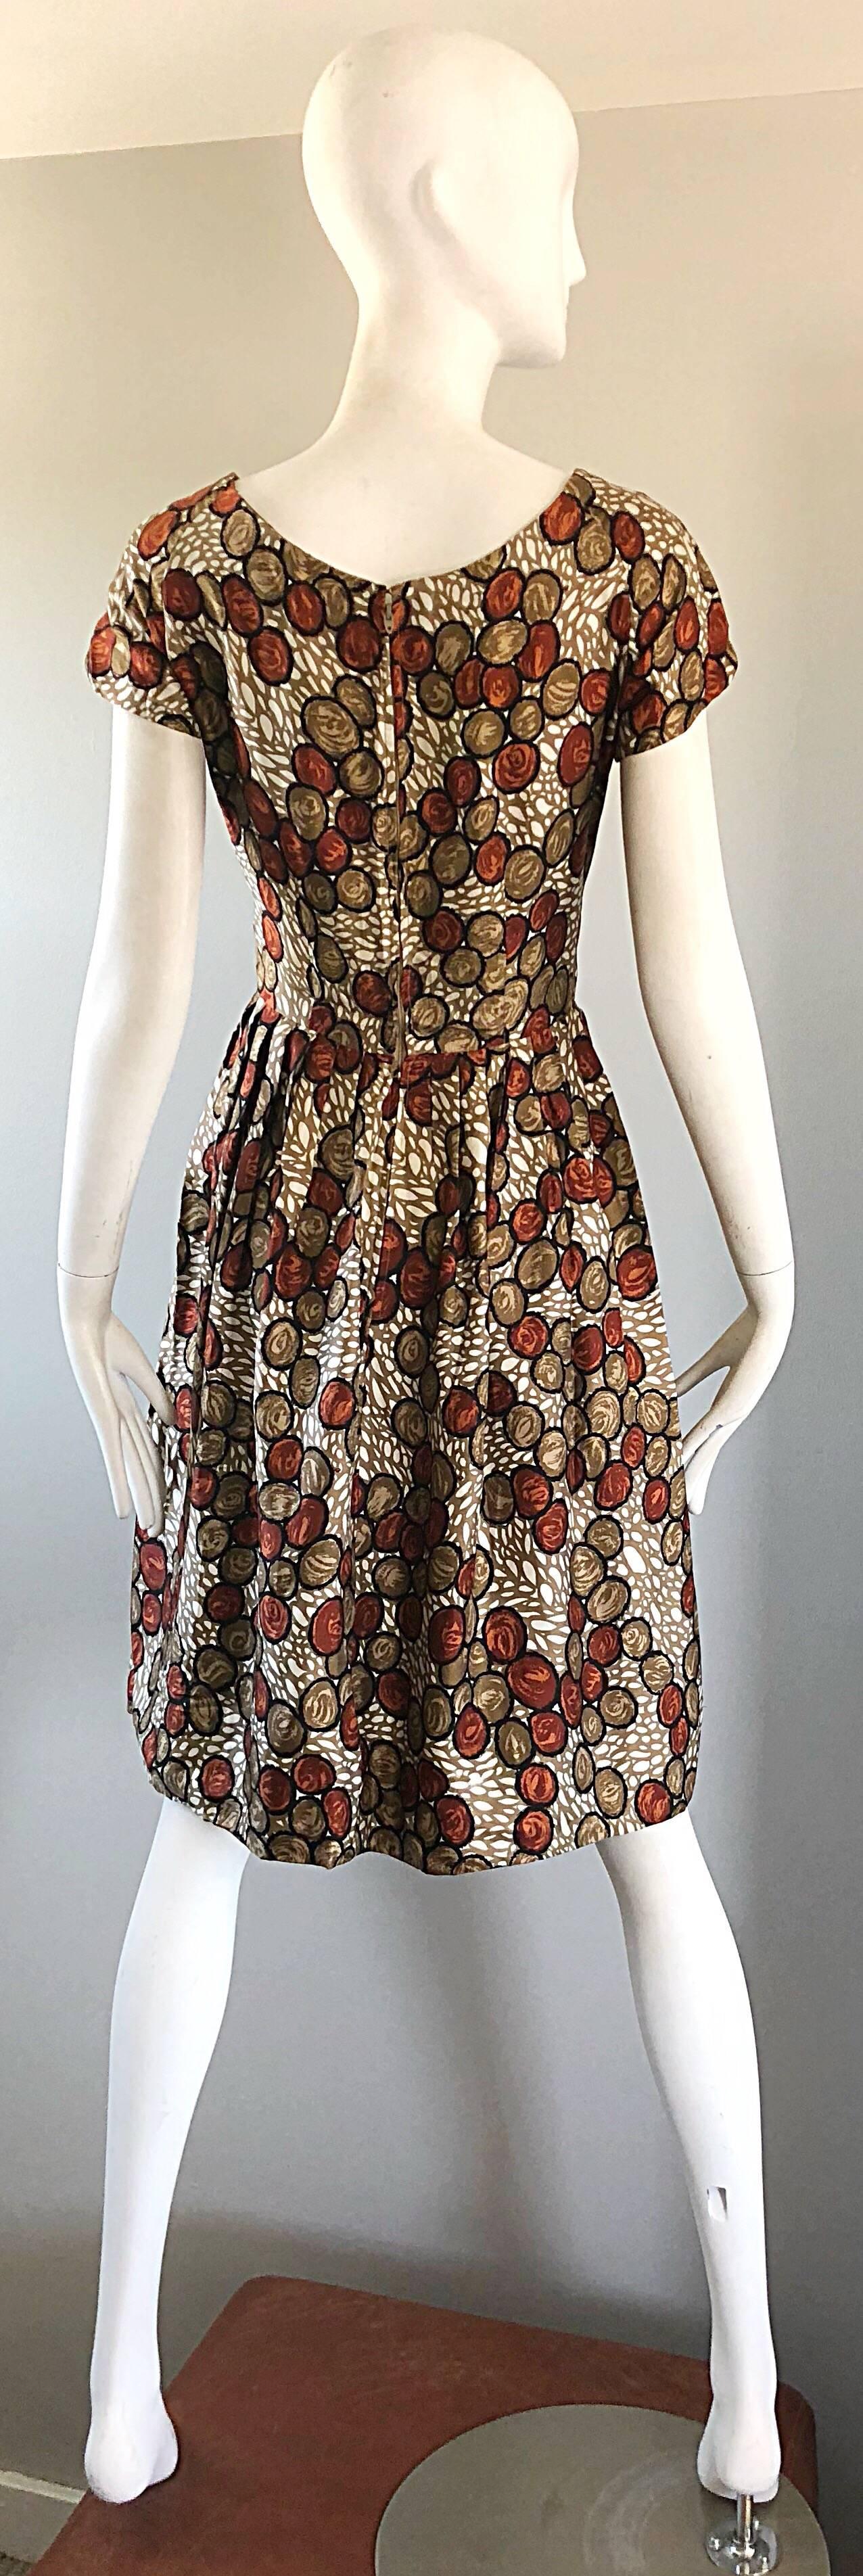 1950s Walnut Nut Print Fit n ' Flare Brown Beige Ivory Silk 50s Vintage Dress  8